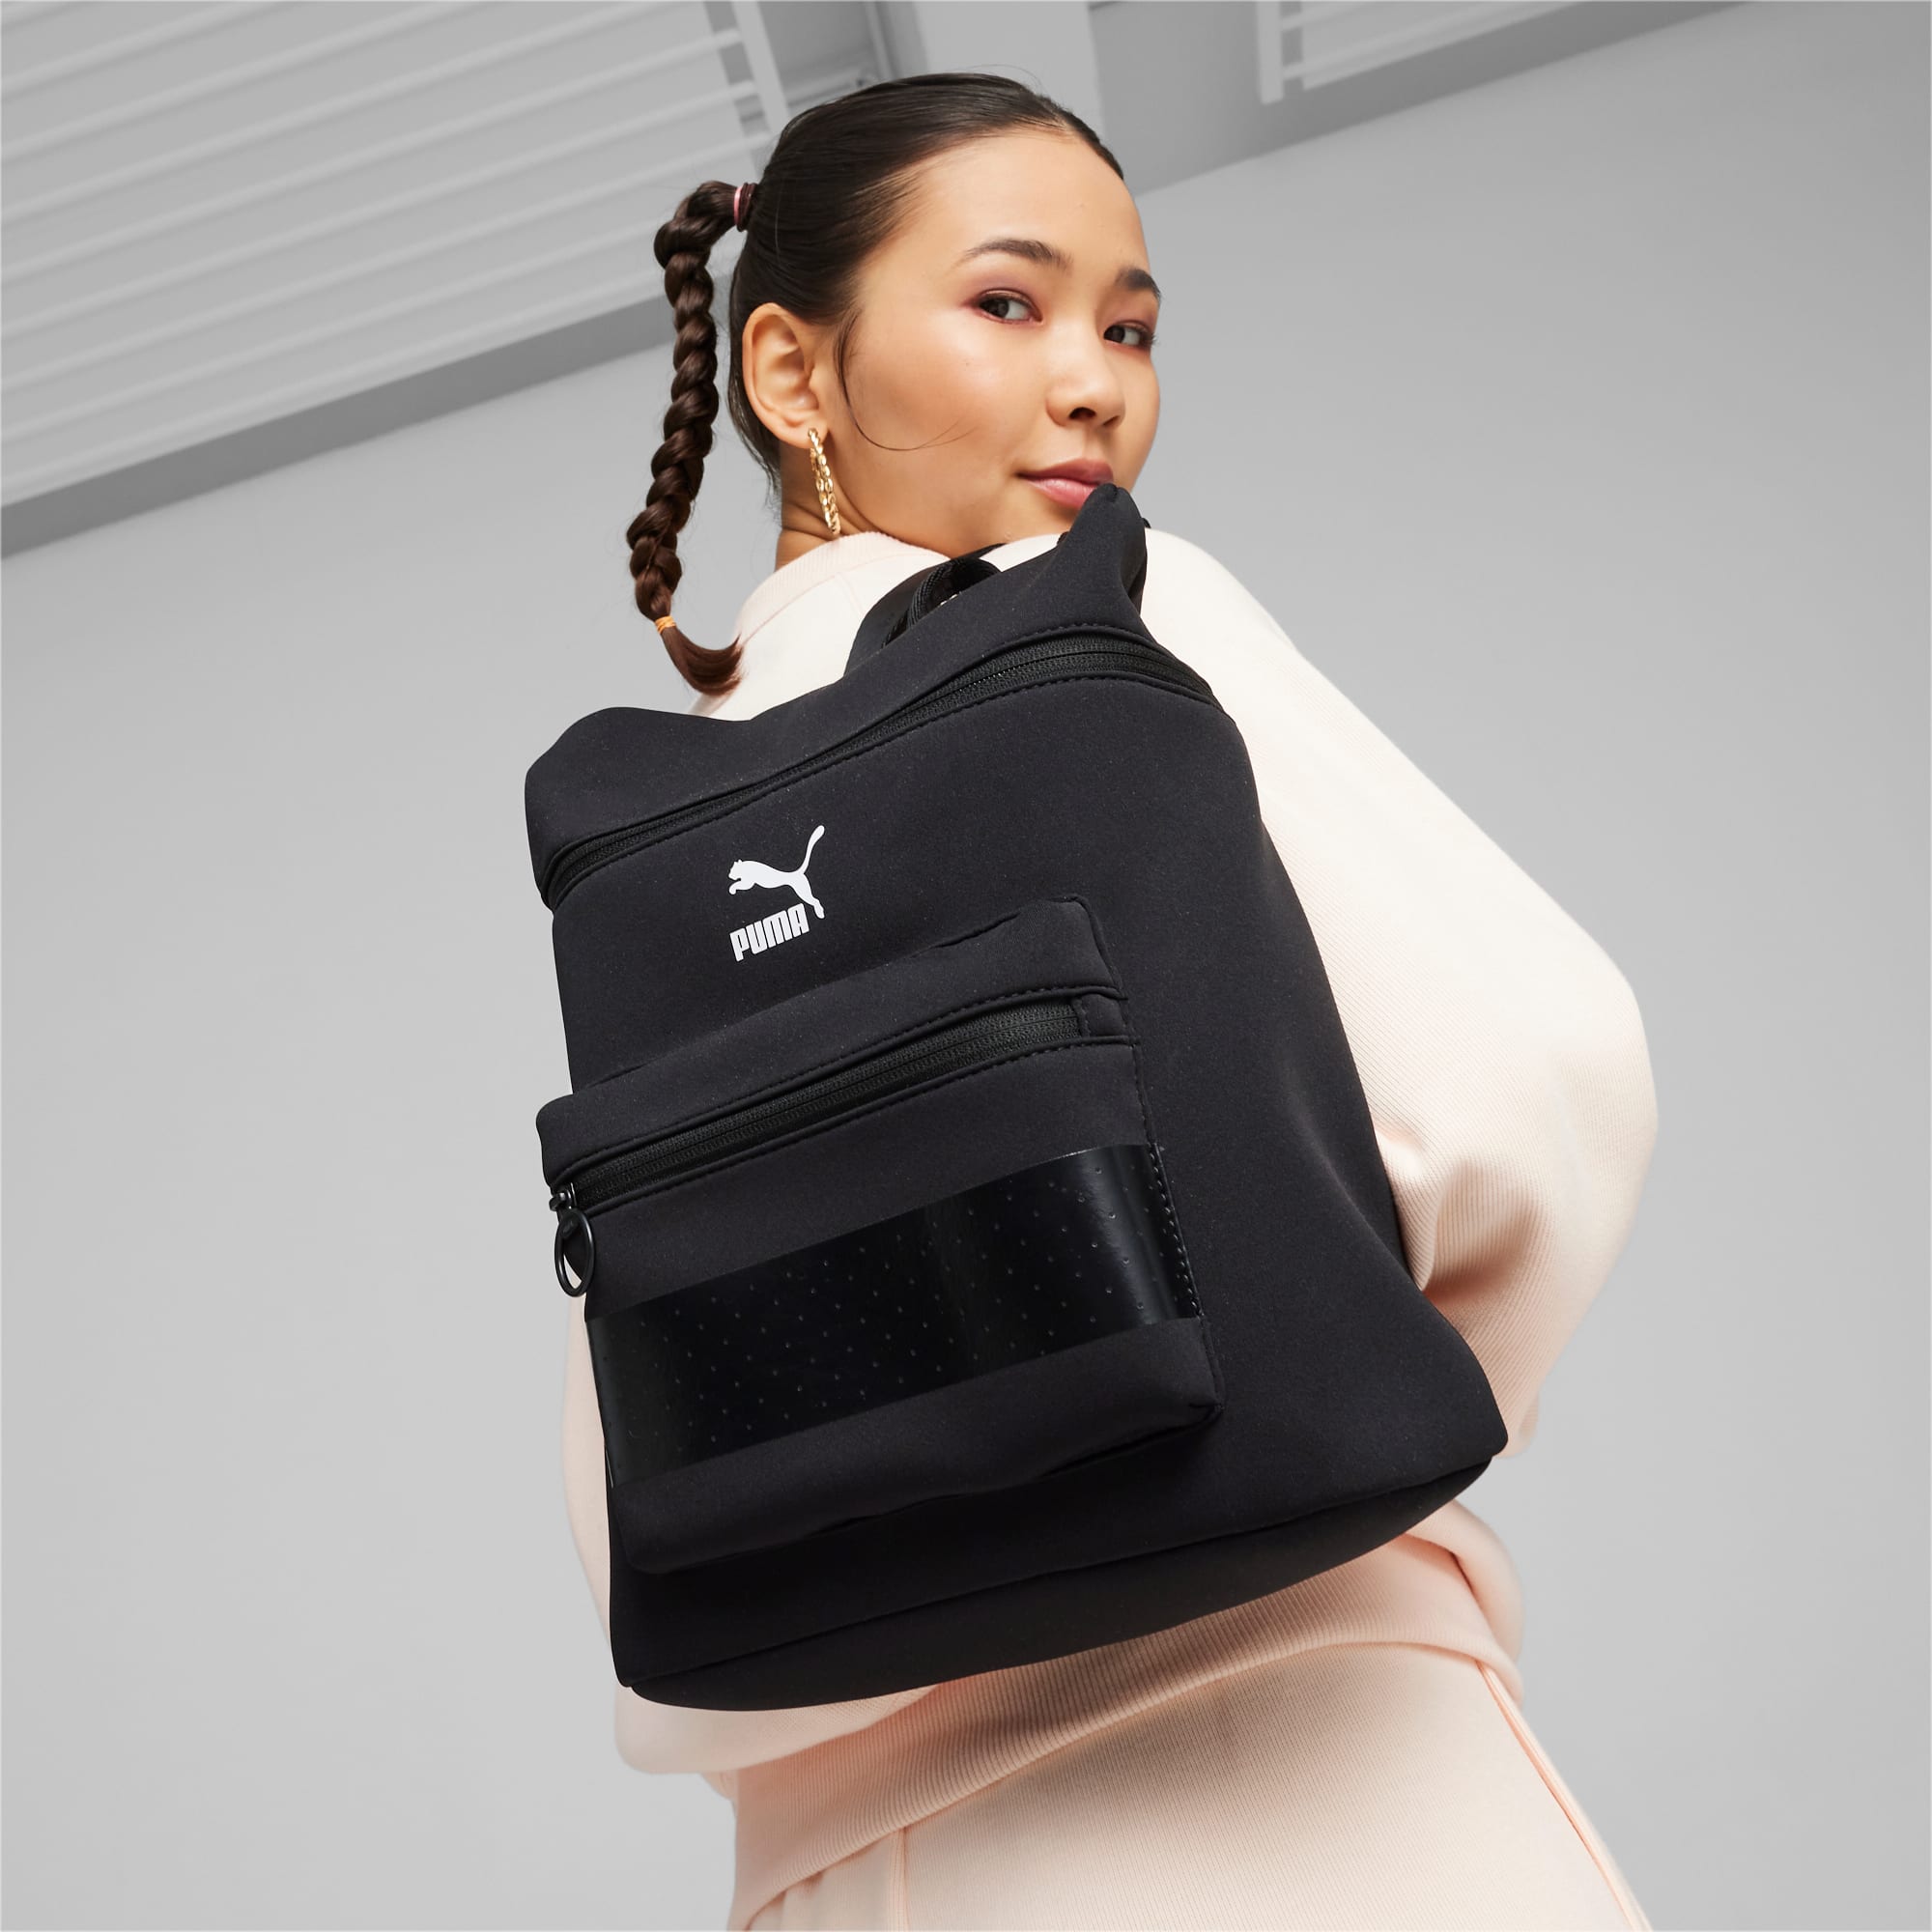 Women's PUMA Prime Classics Backpack, Black, Accessories